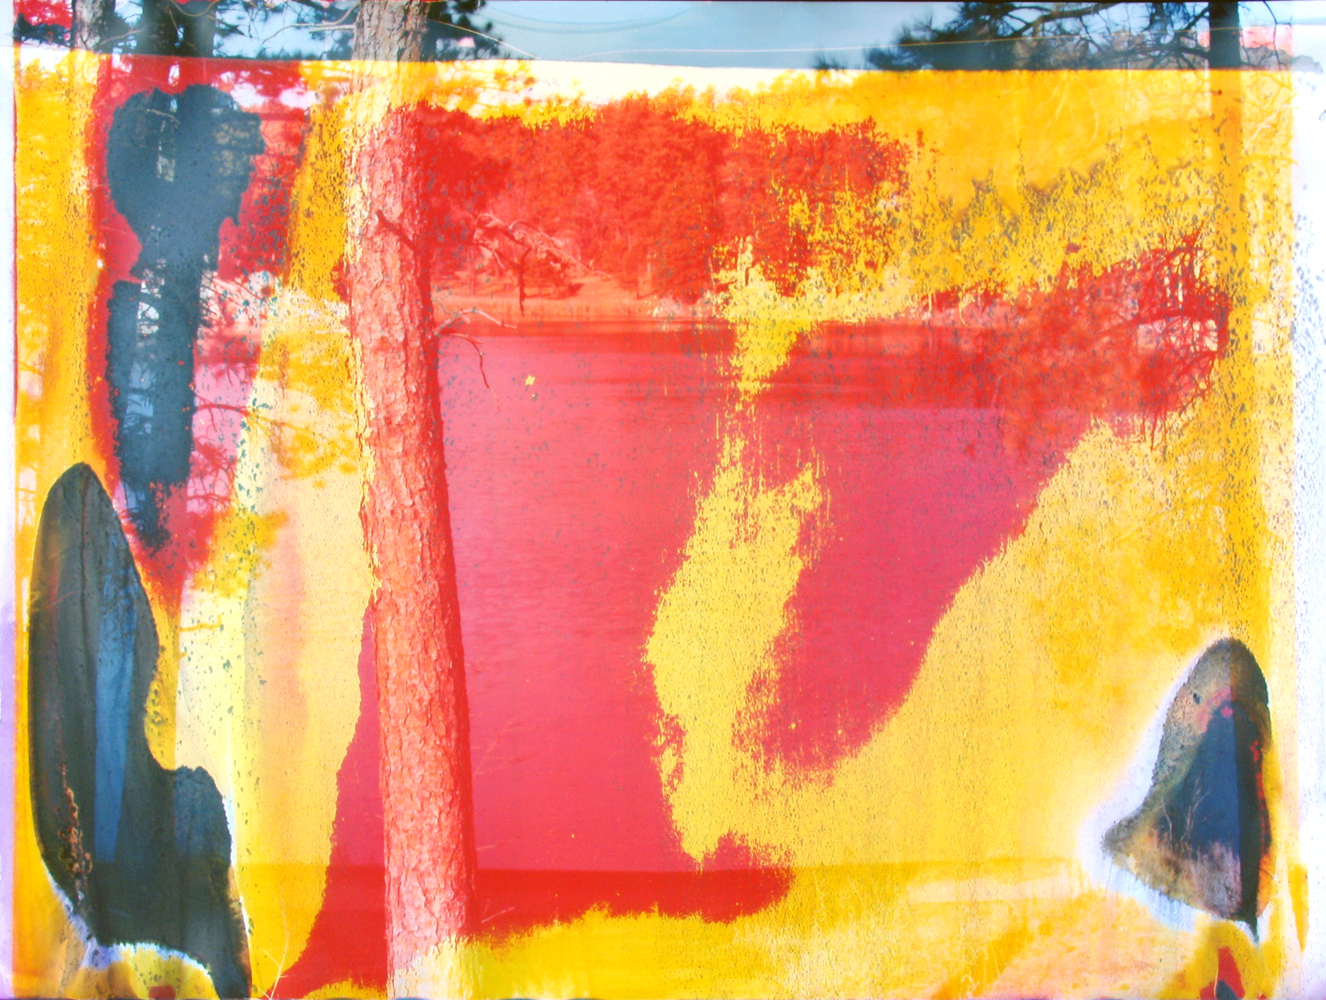 Horse Thief Lake, WA 3, 2008. Chromogenic print soaked in Horse Thief Lake water.